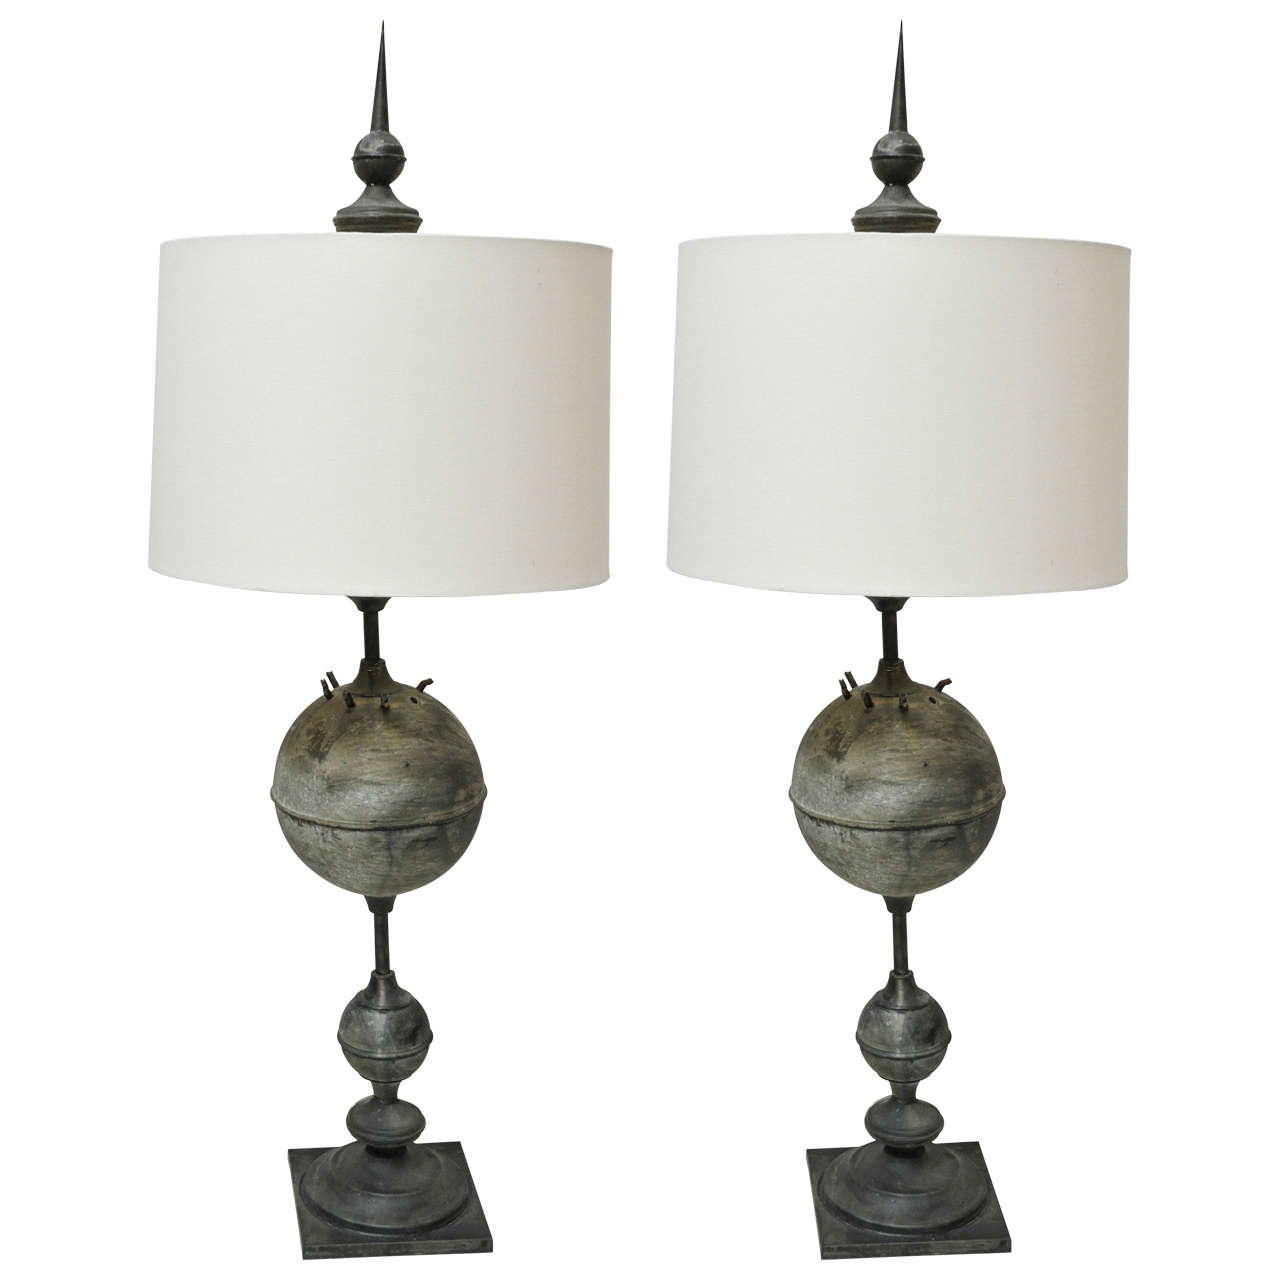 Pair of Antique Metal Urn Lamps